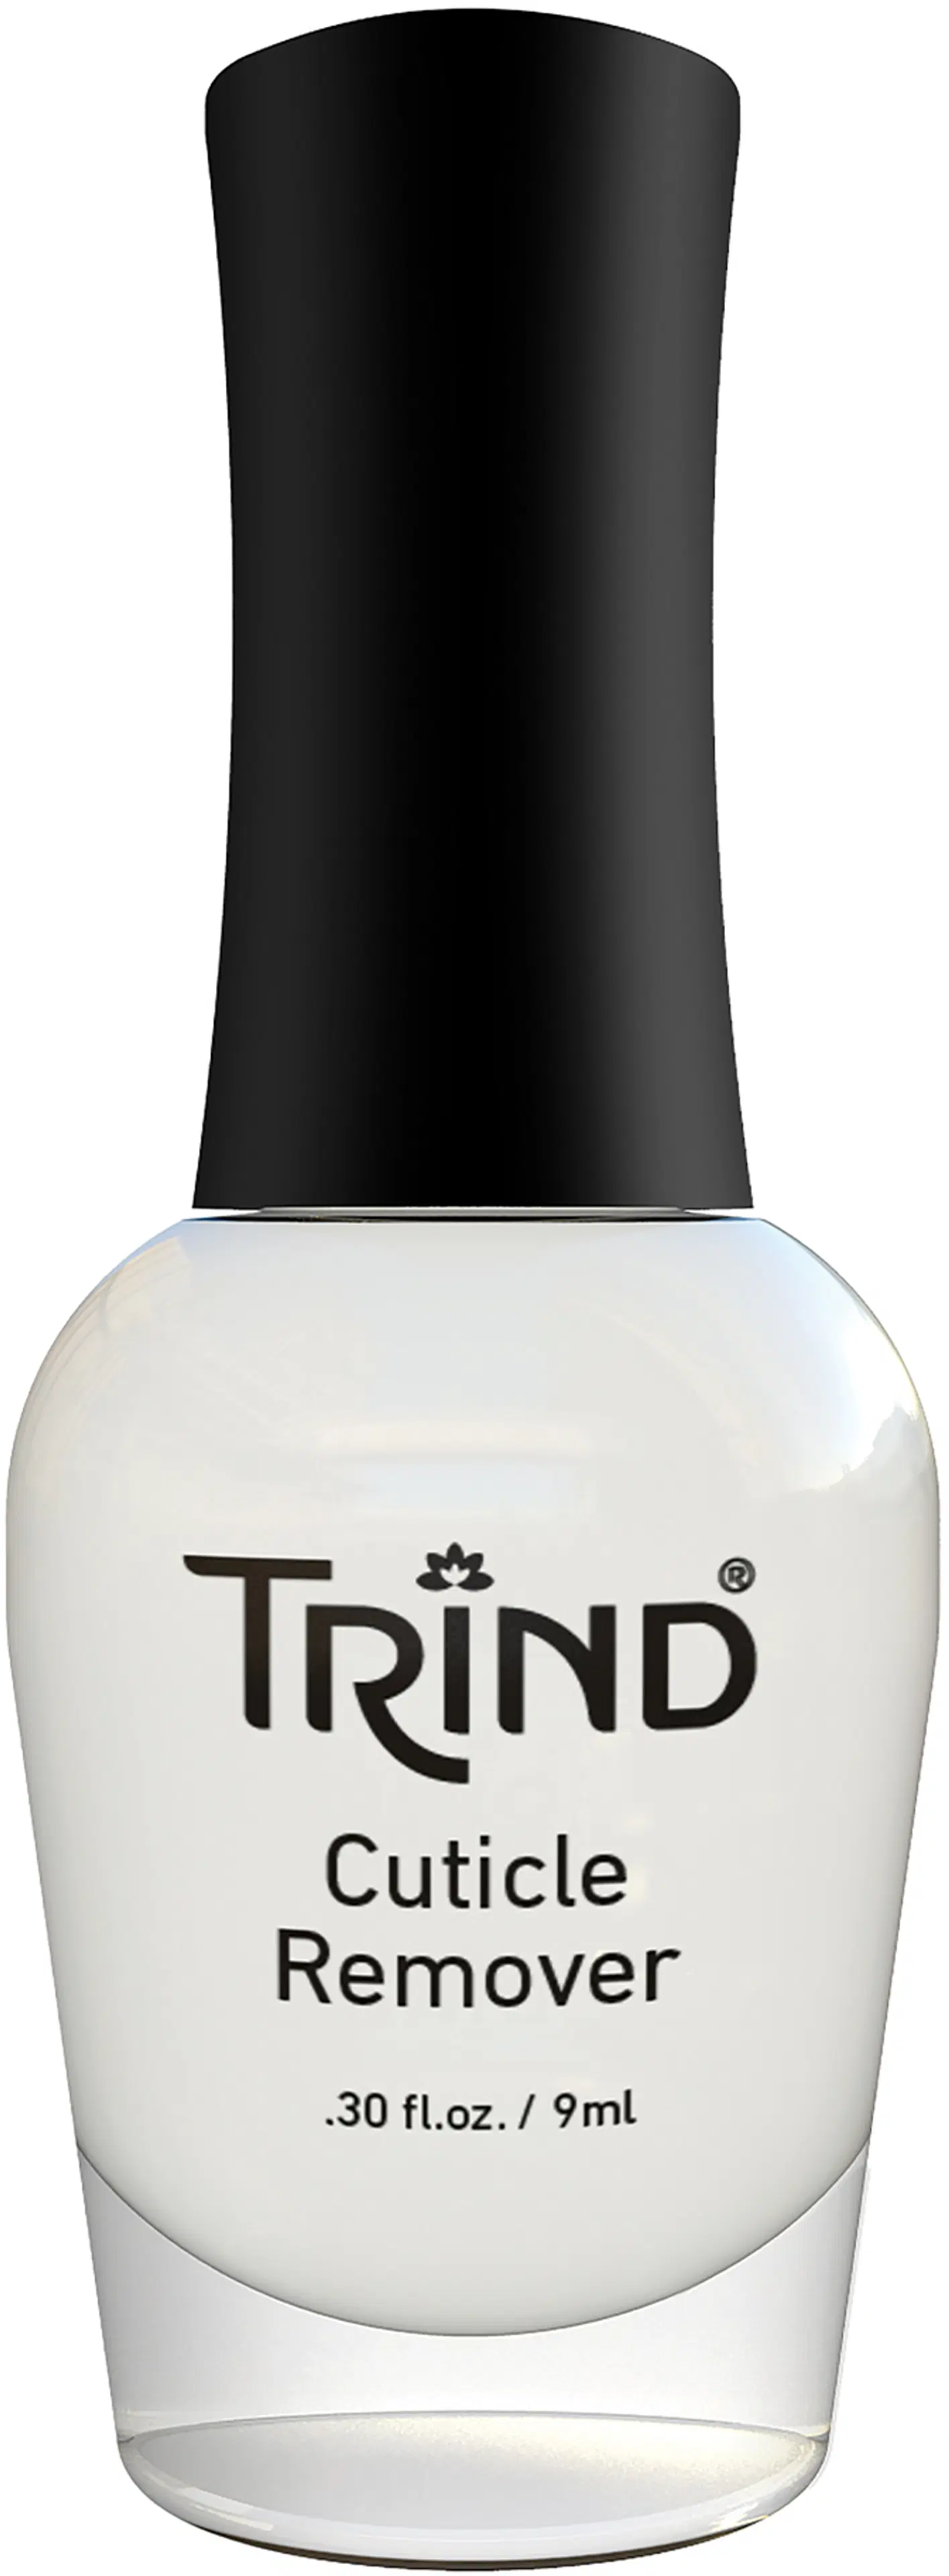 TRIND Cuticle Remover 9ml + 2 manicure sticks